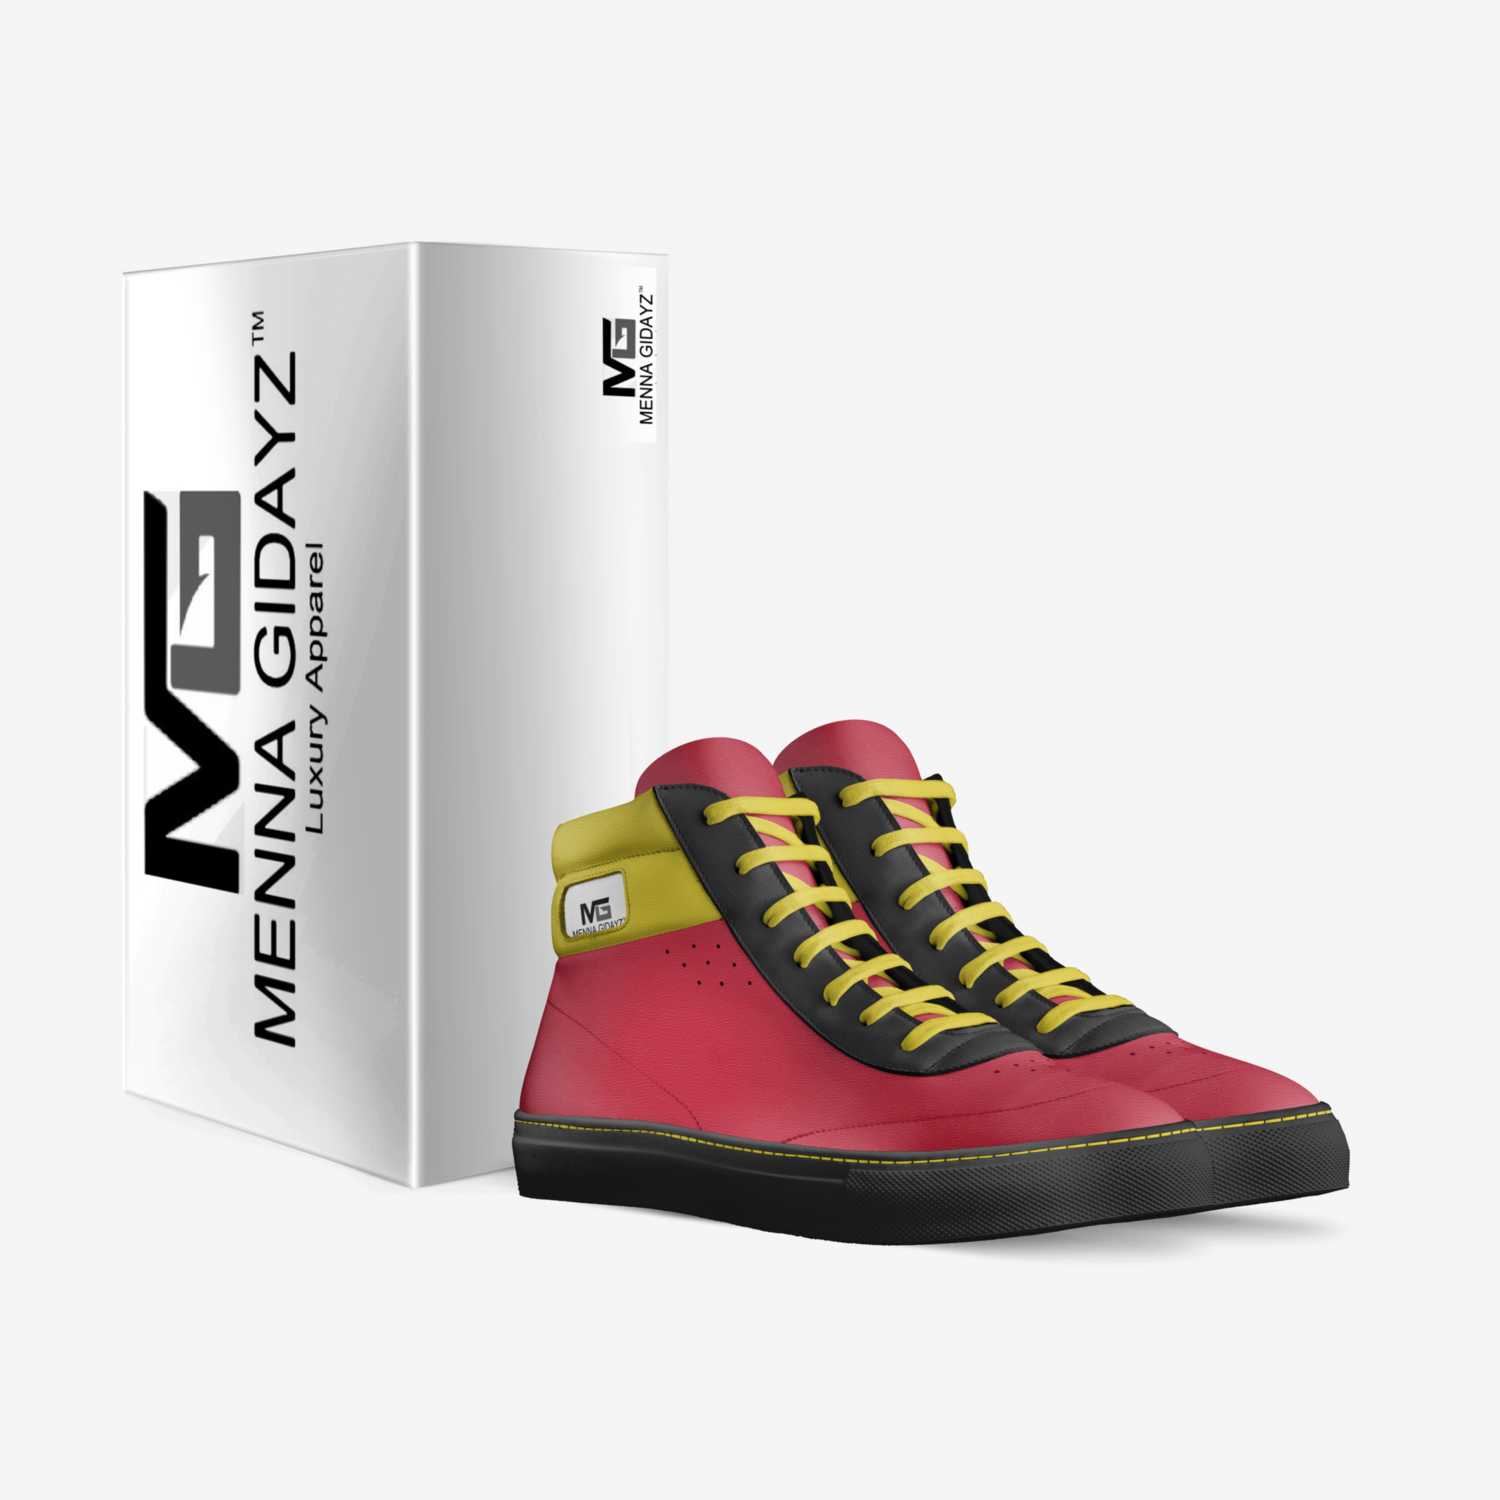 MENNA GIDAYZ custom made in Italy shoes by Jamma vanburan | Box view